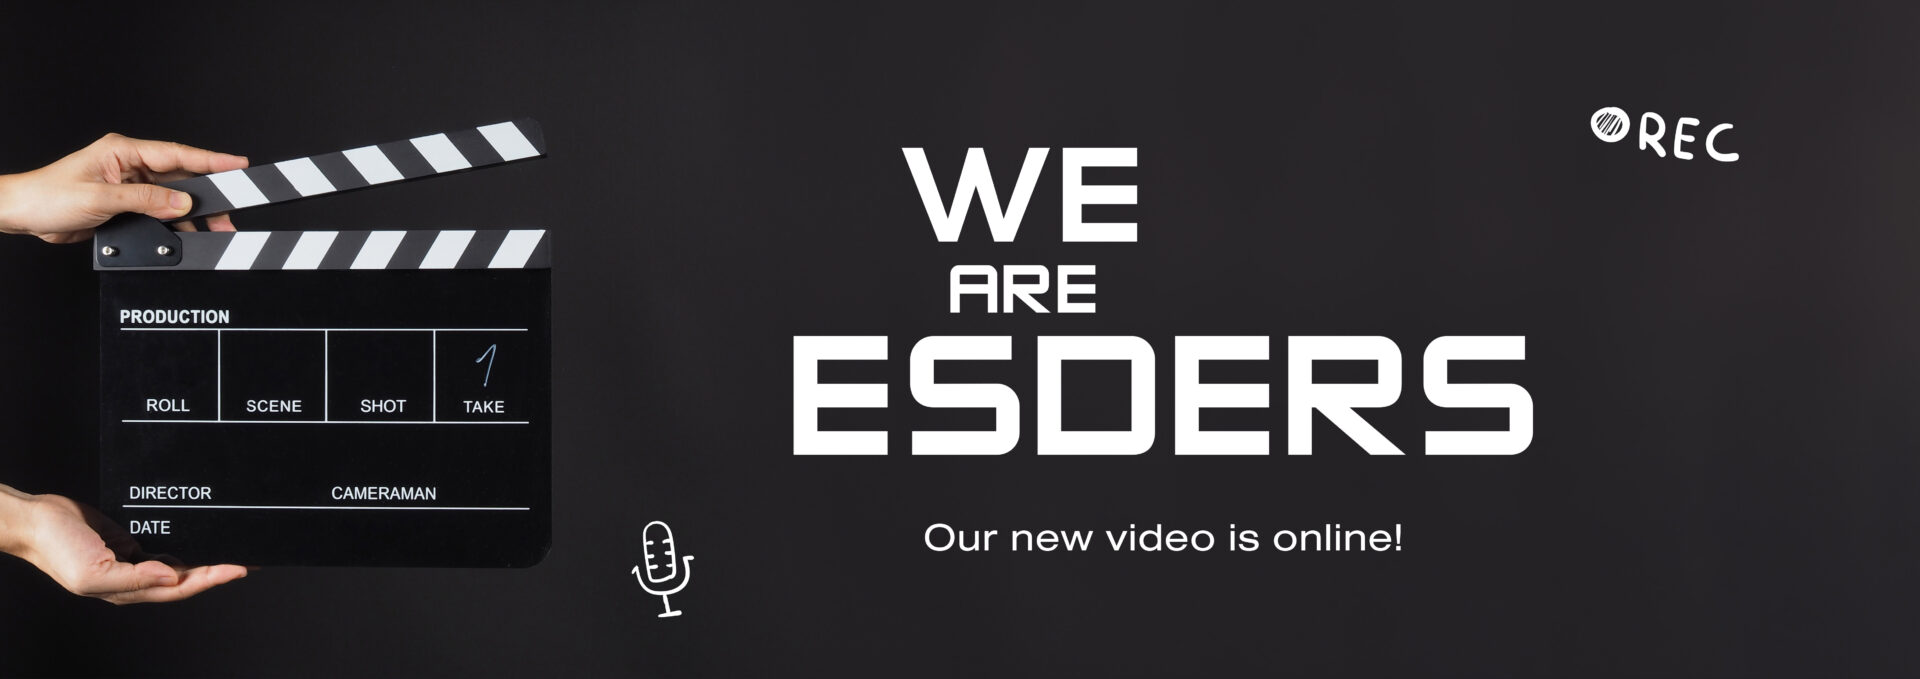 We are Esders